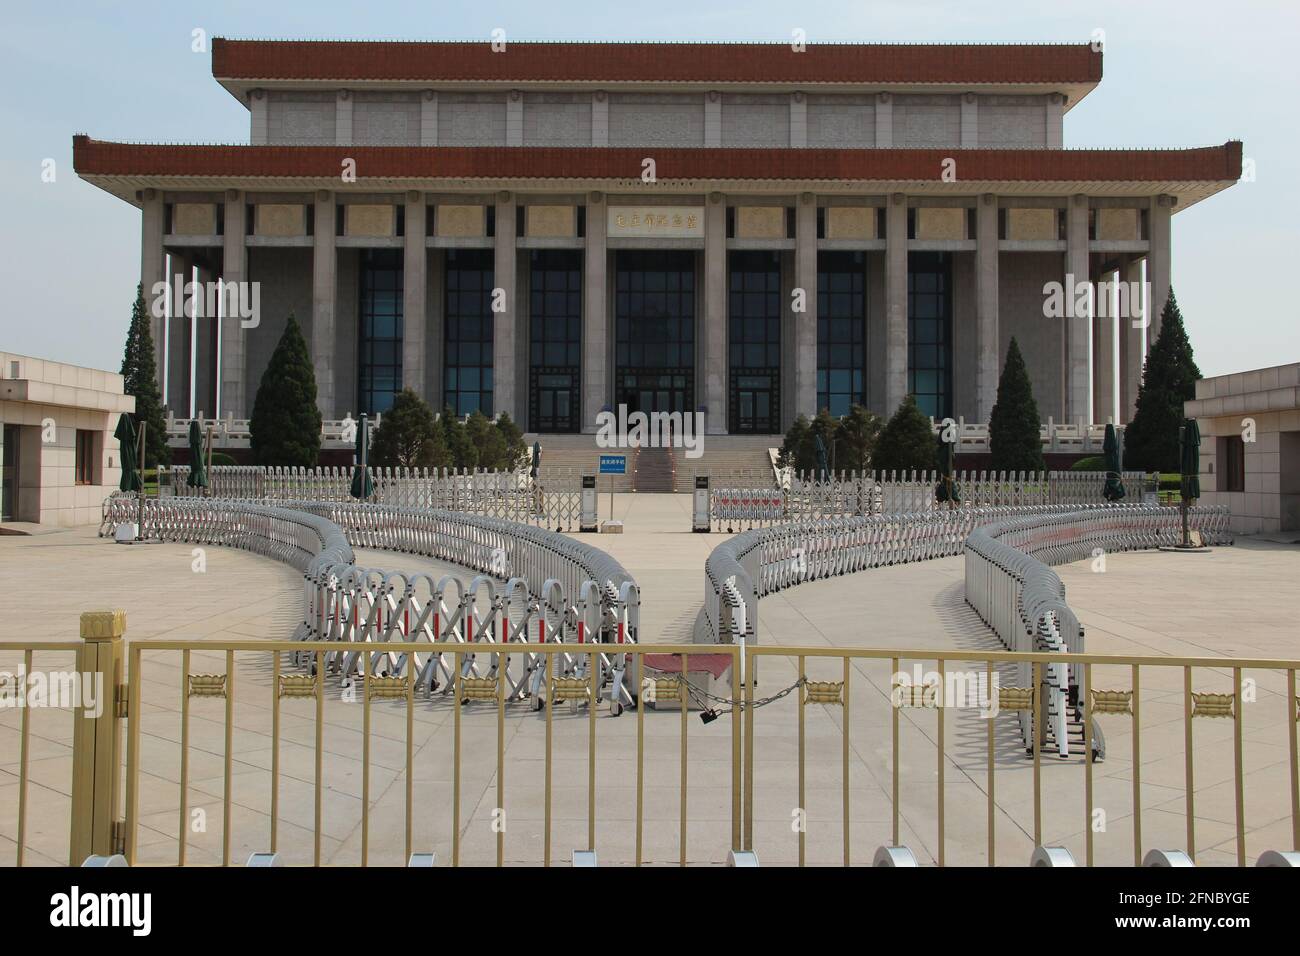 The Mausoleum of Mao Zedong in Tiananmen Square in Bejing, China Stock Photo